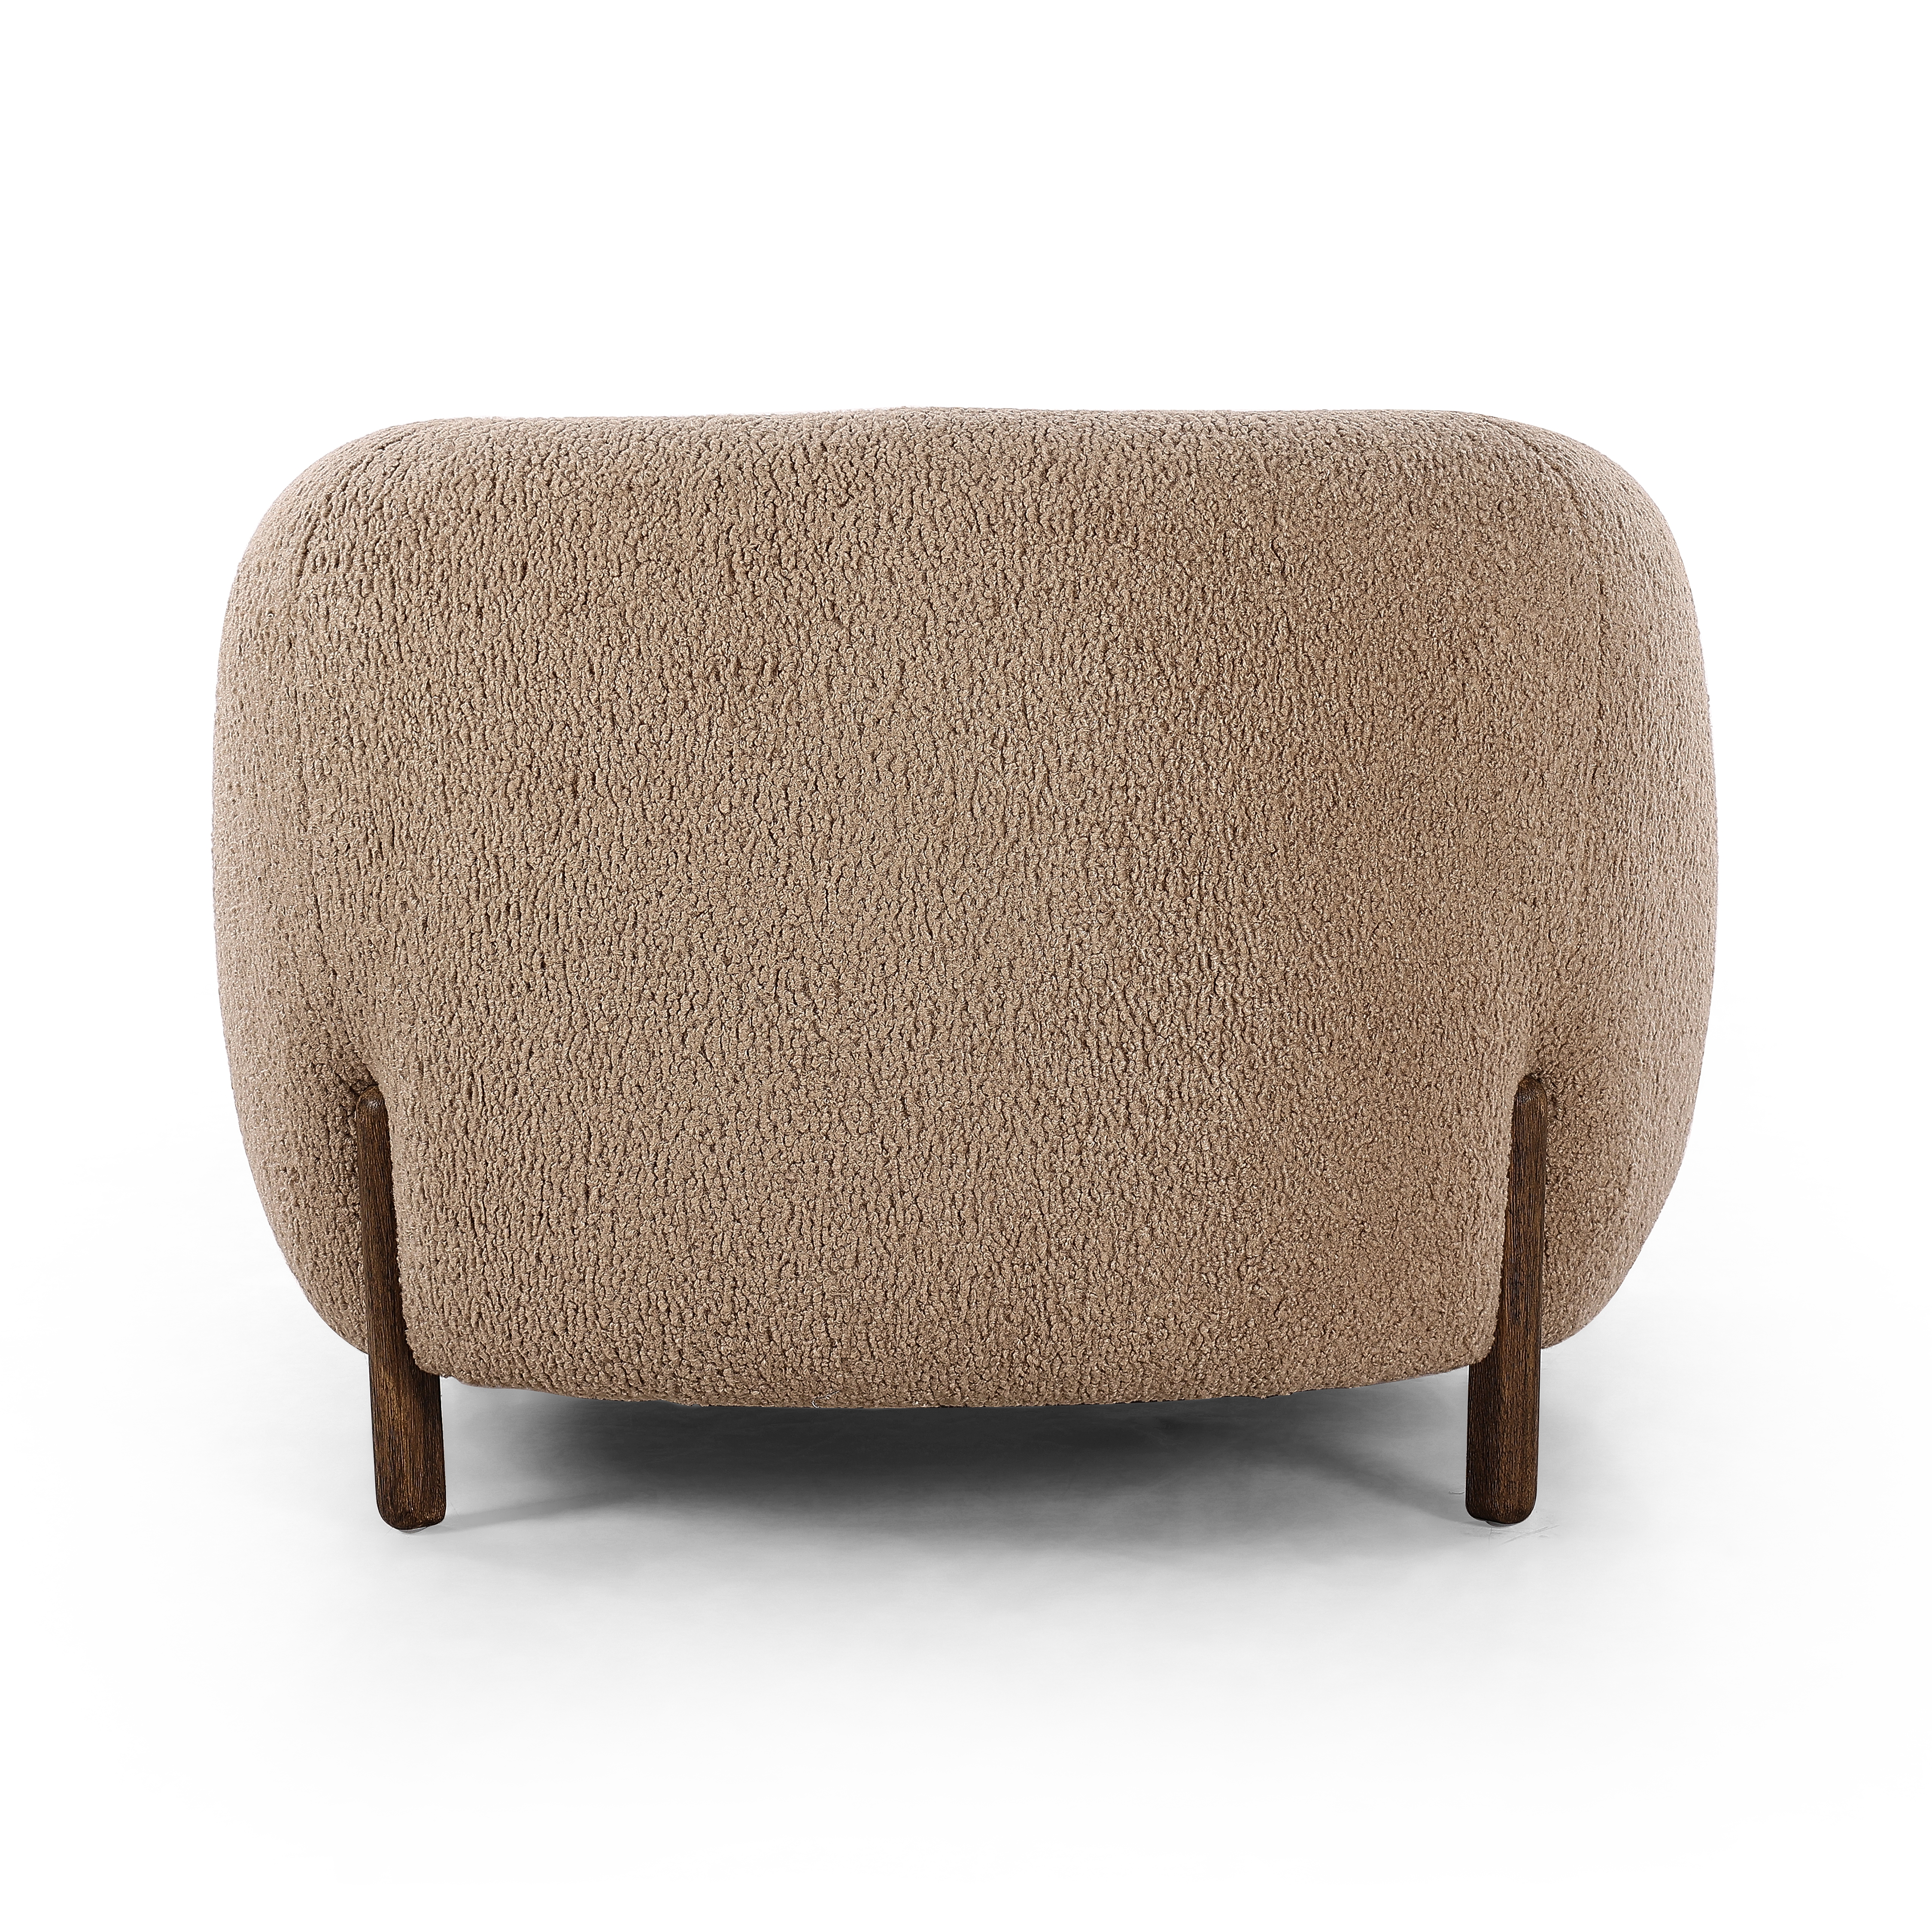 Lyla Chair-Sheepskin Camel - Image 5